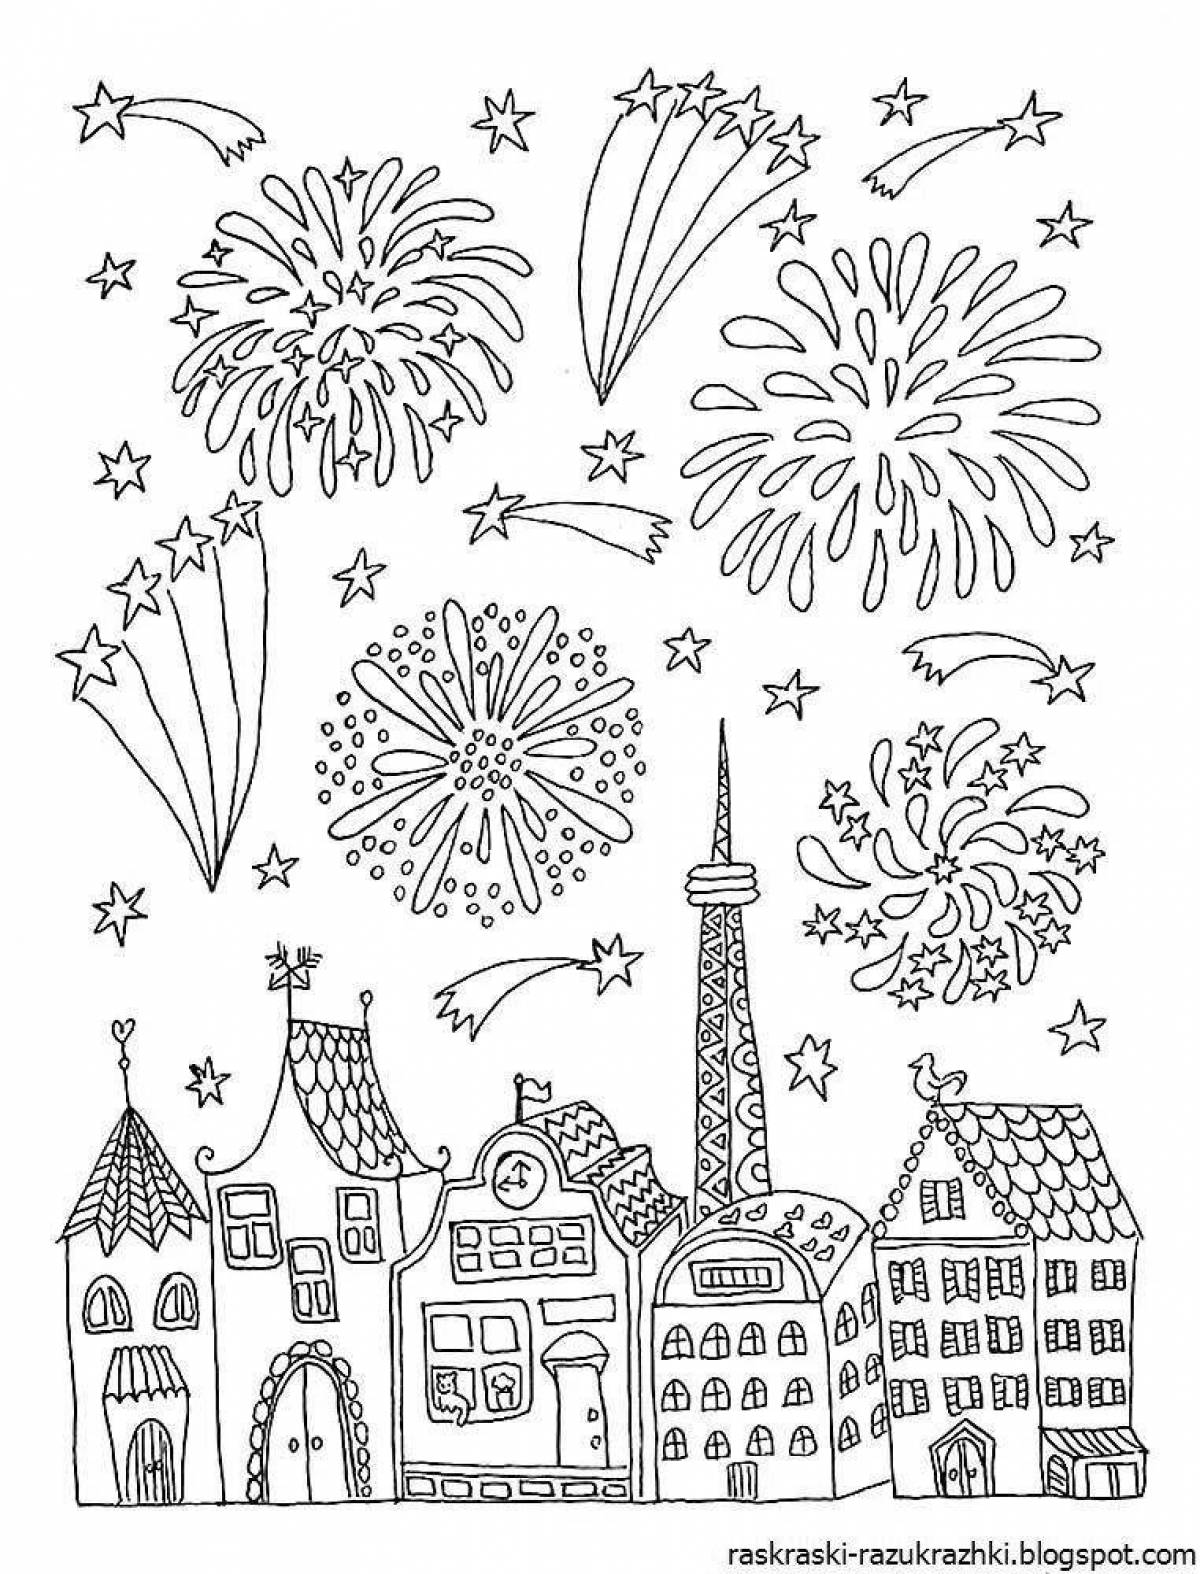 Festive fireworks coloring book for kids